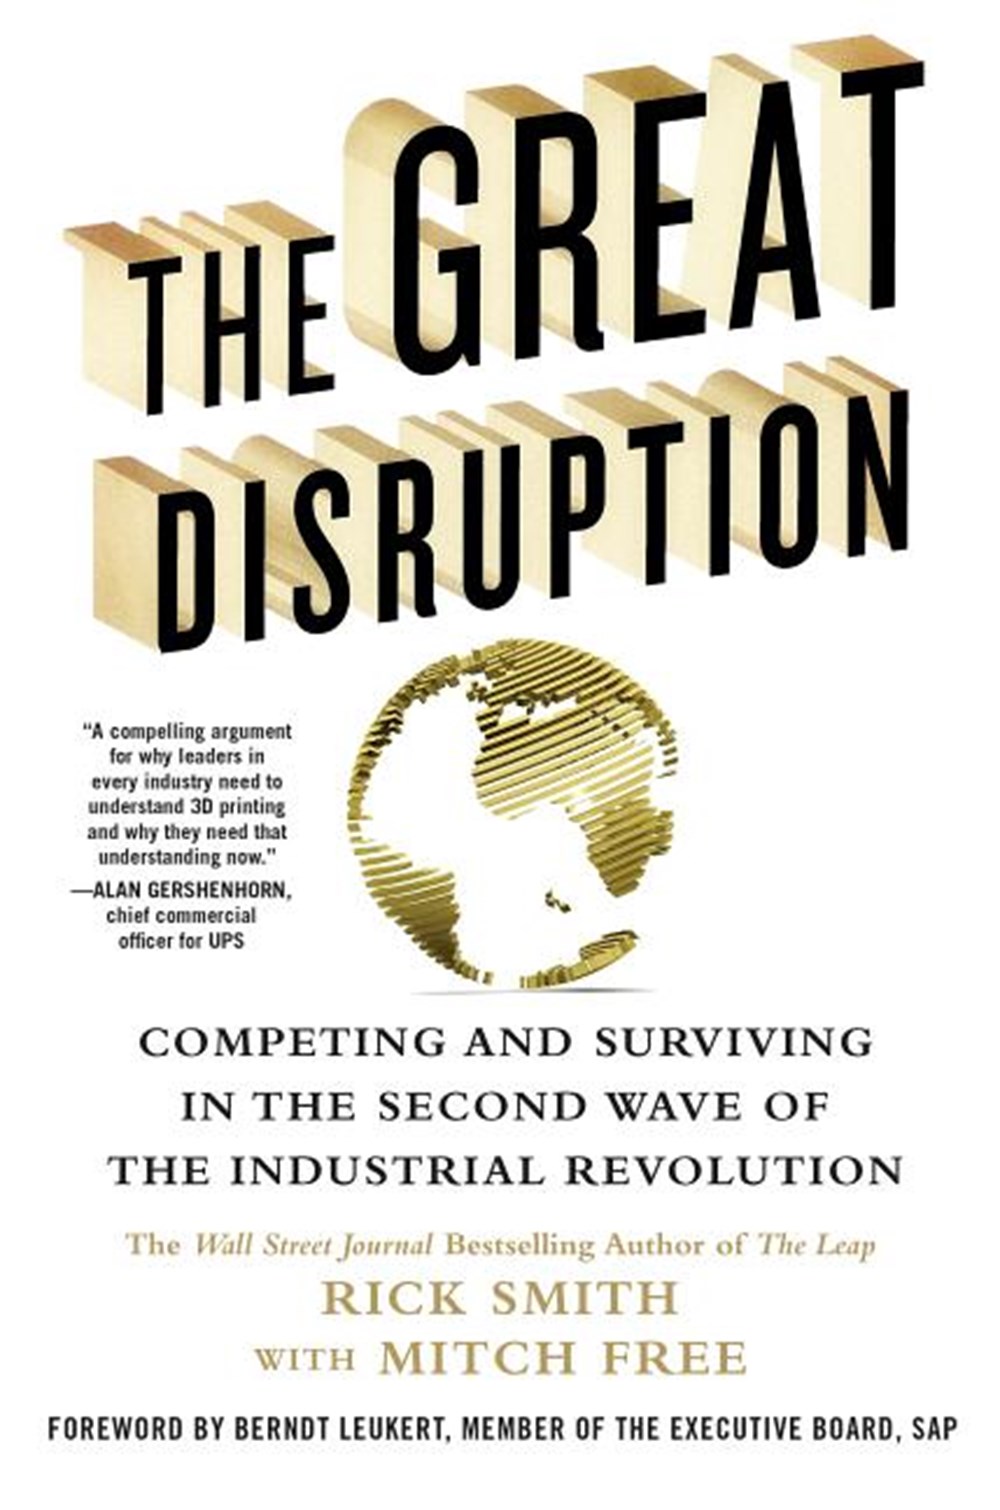 Great Disruption